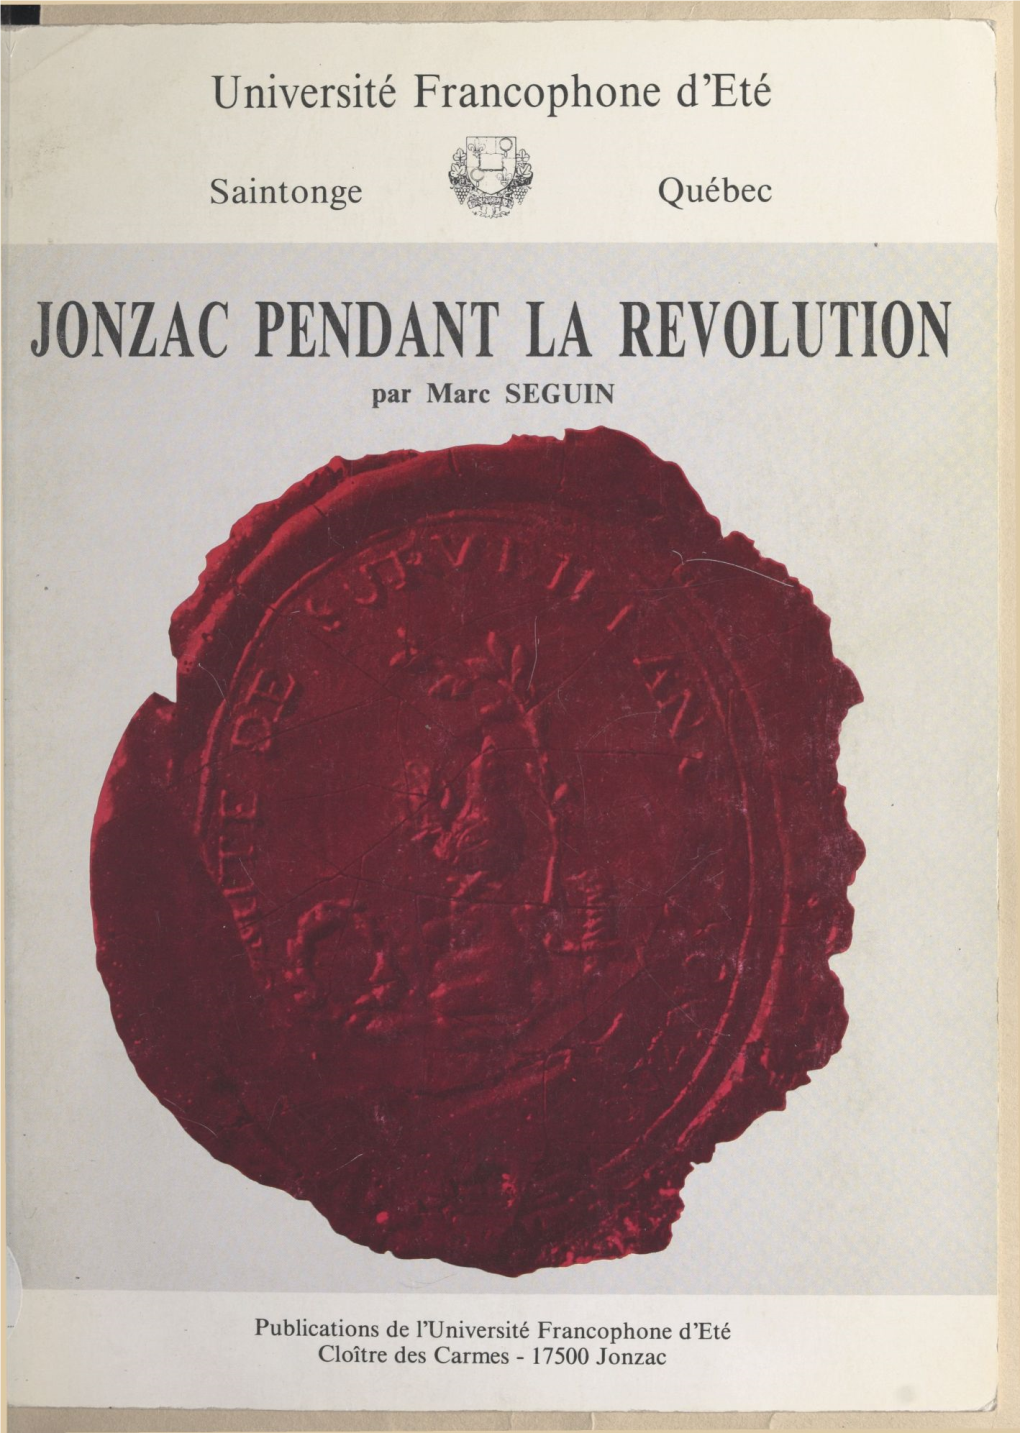 Jonzac Pendant La Révolution